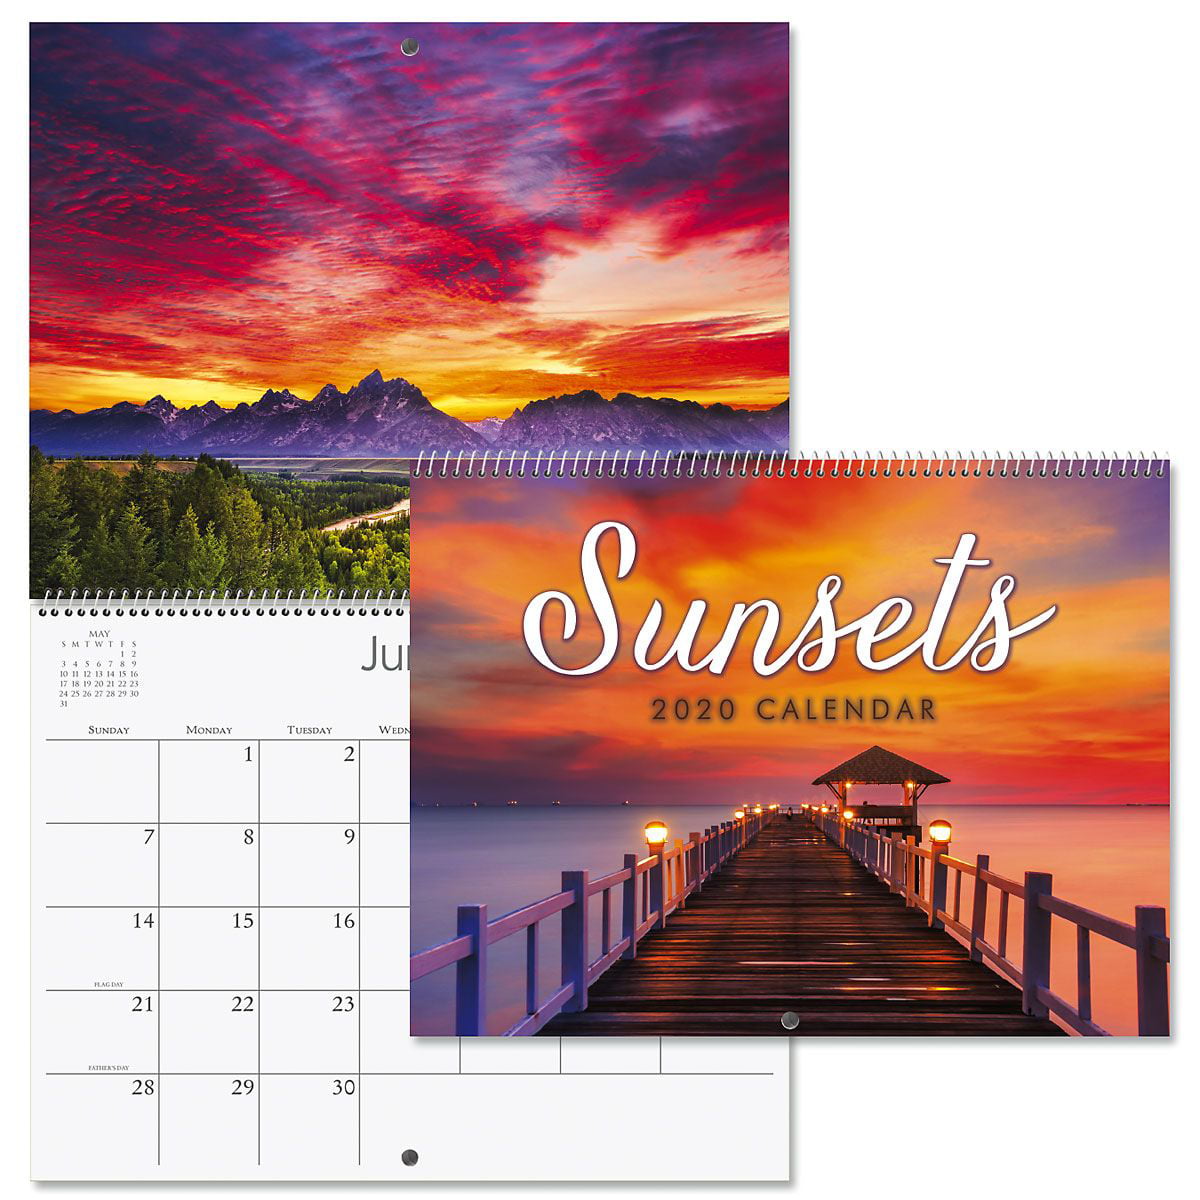 2020 Sunsets Wall Calendar 12" x 9", bookstore quality, spiral bound